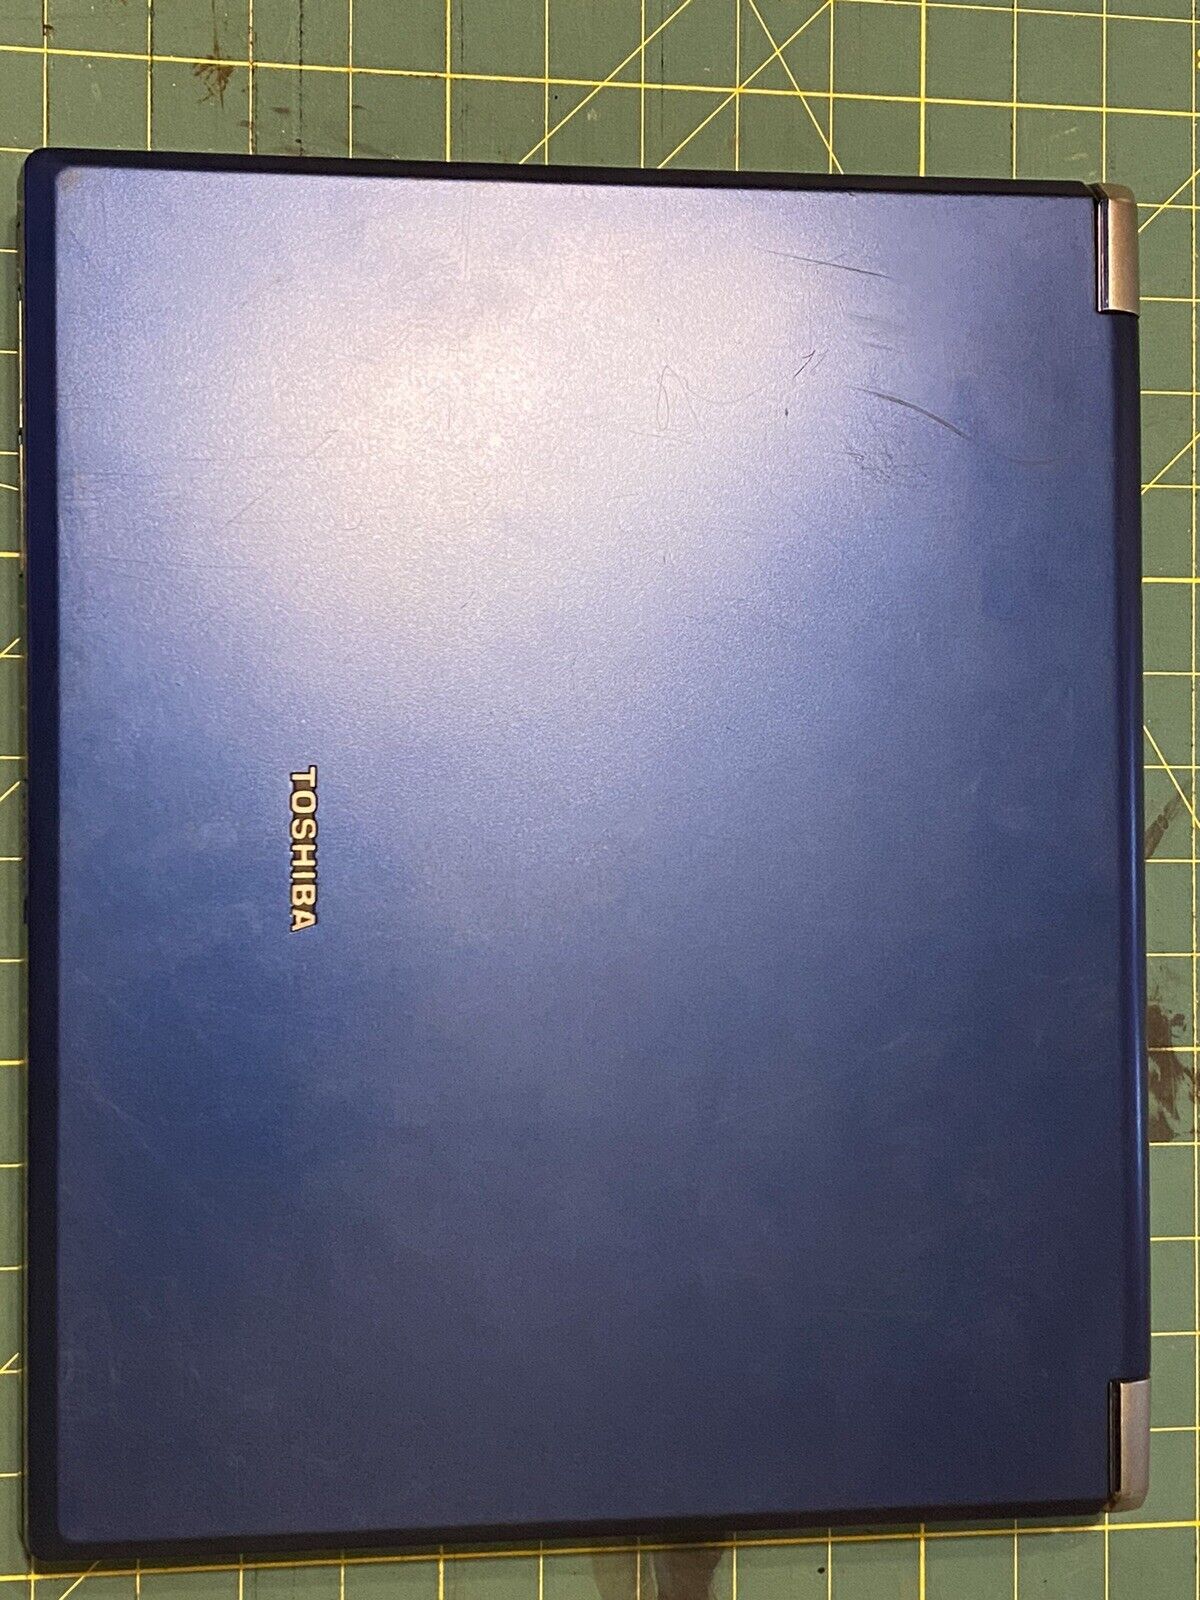 Toshiba Satellite A35-S159  Pentium 4 Windows XP Laptop.  Sold As Is